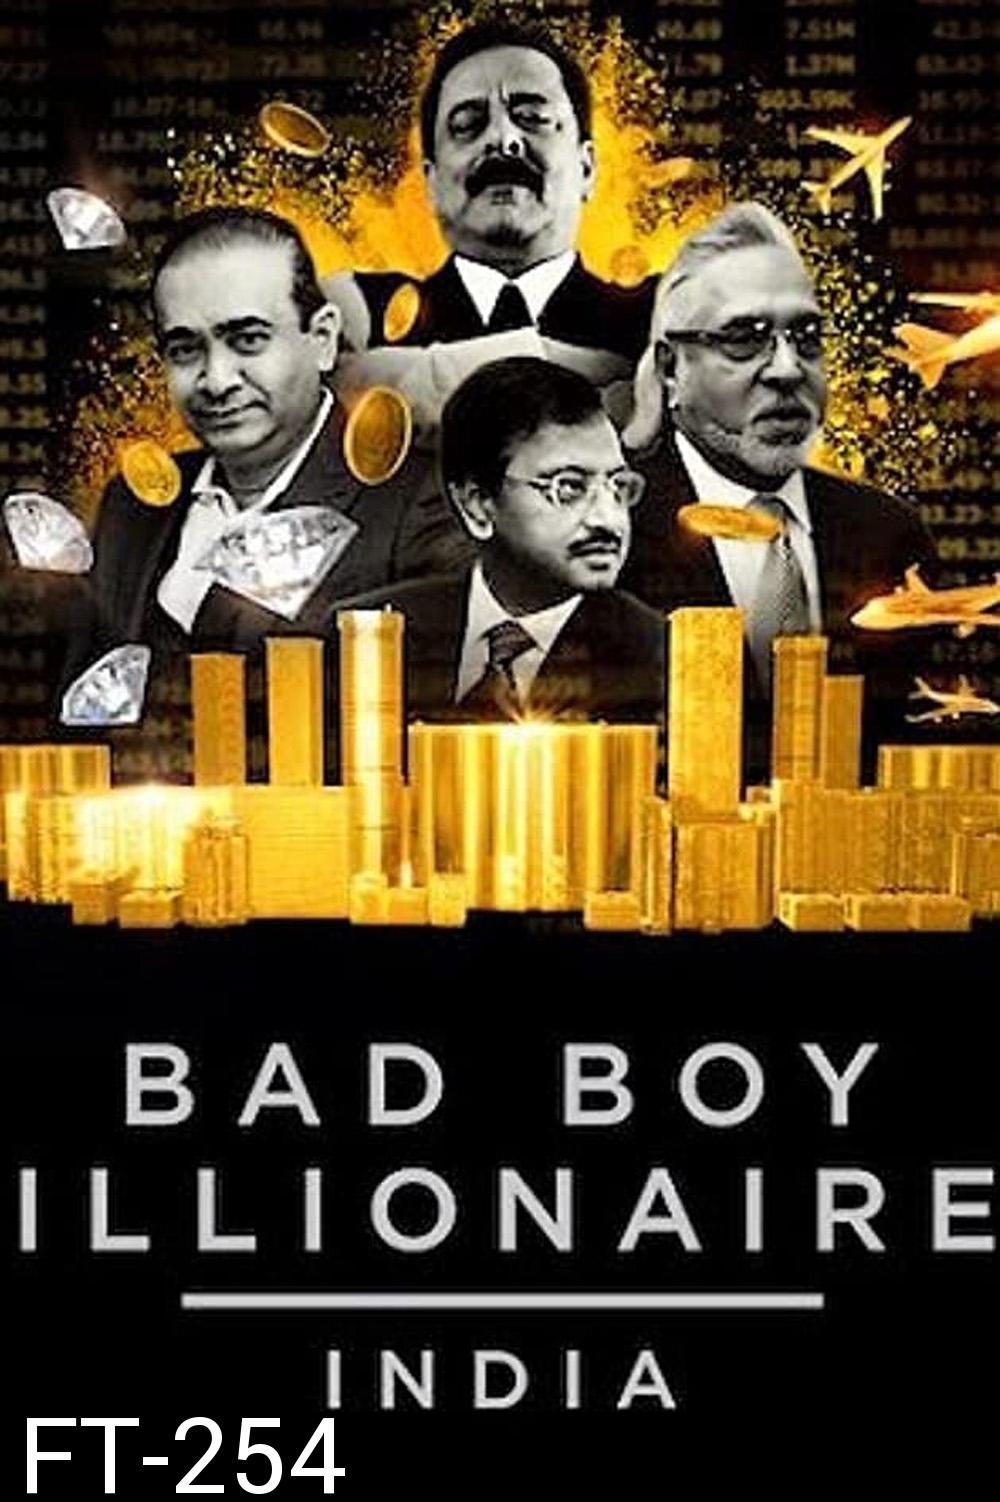 Bad Boy Billionaires – India หนุ่มร้ายพันล้าน - อินเดีย (2020) 3 ตอน